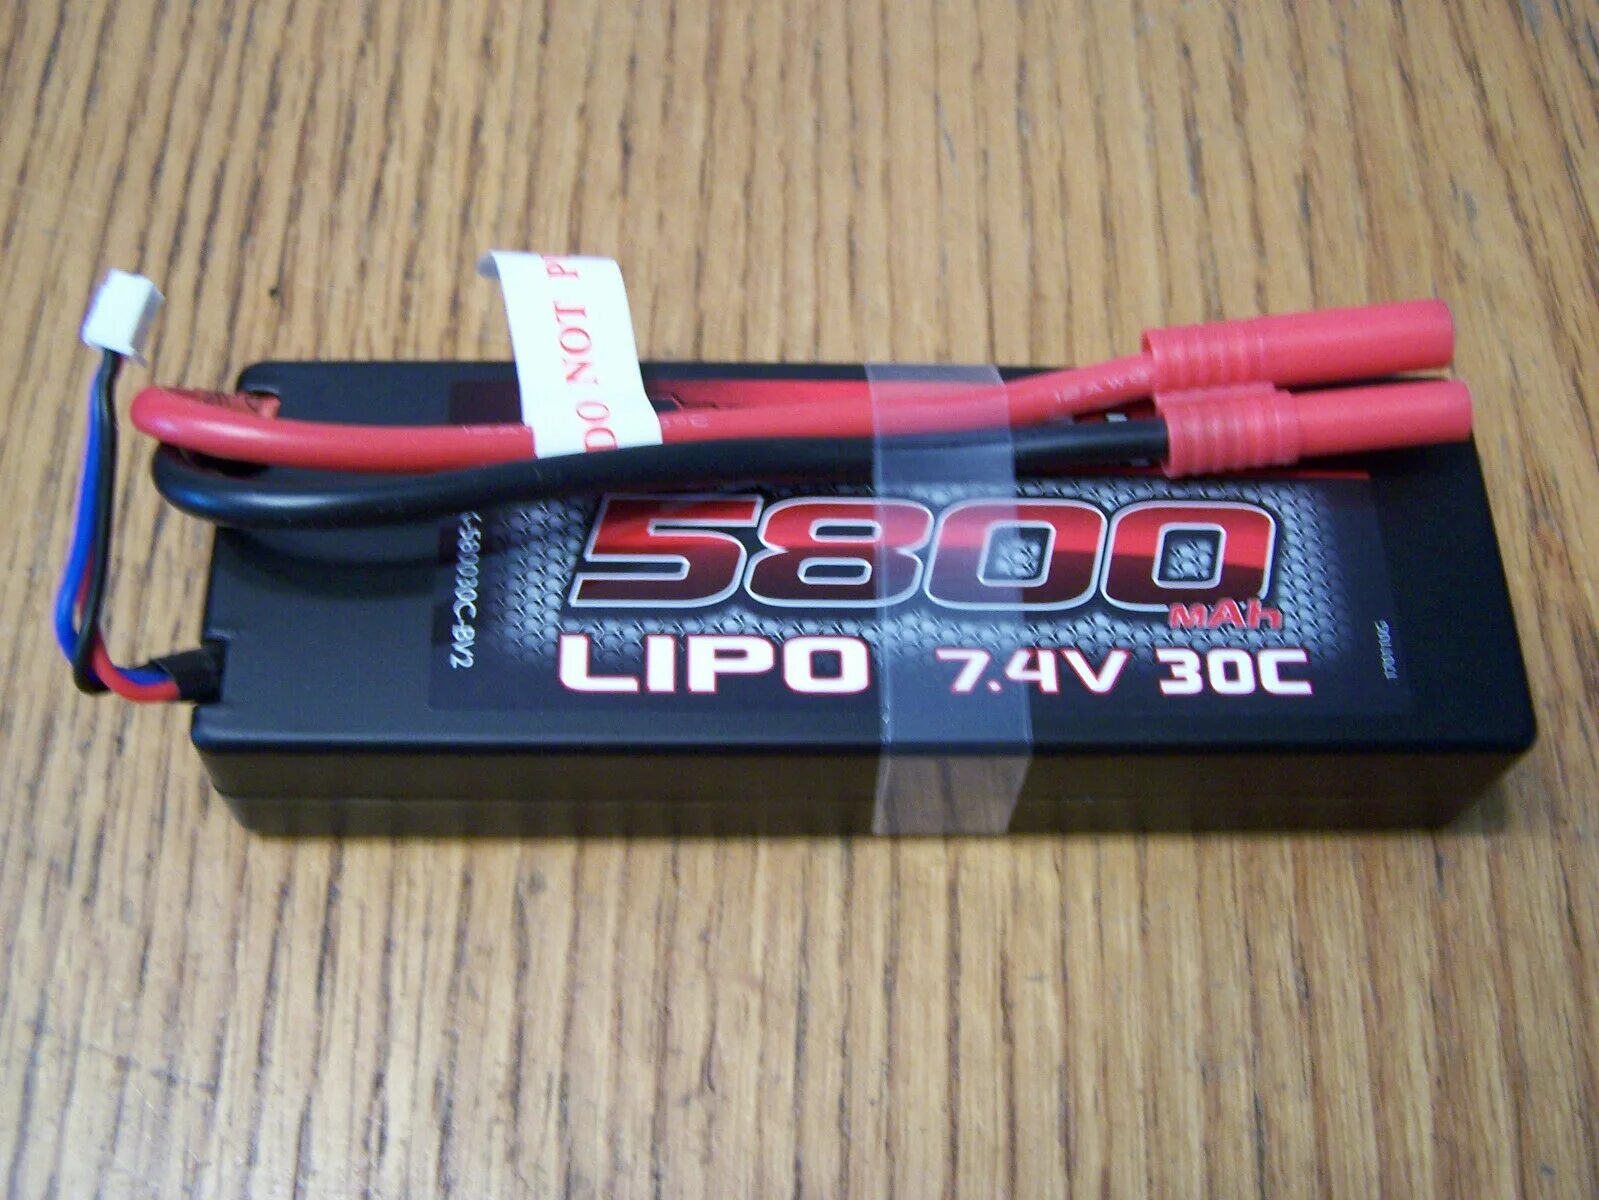 Lipo 30c7.4w для монстр трека. Battery Hexfly 7.4v. Аккумулятор hx201703. Аккумулятор HX x7. Av bv c